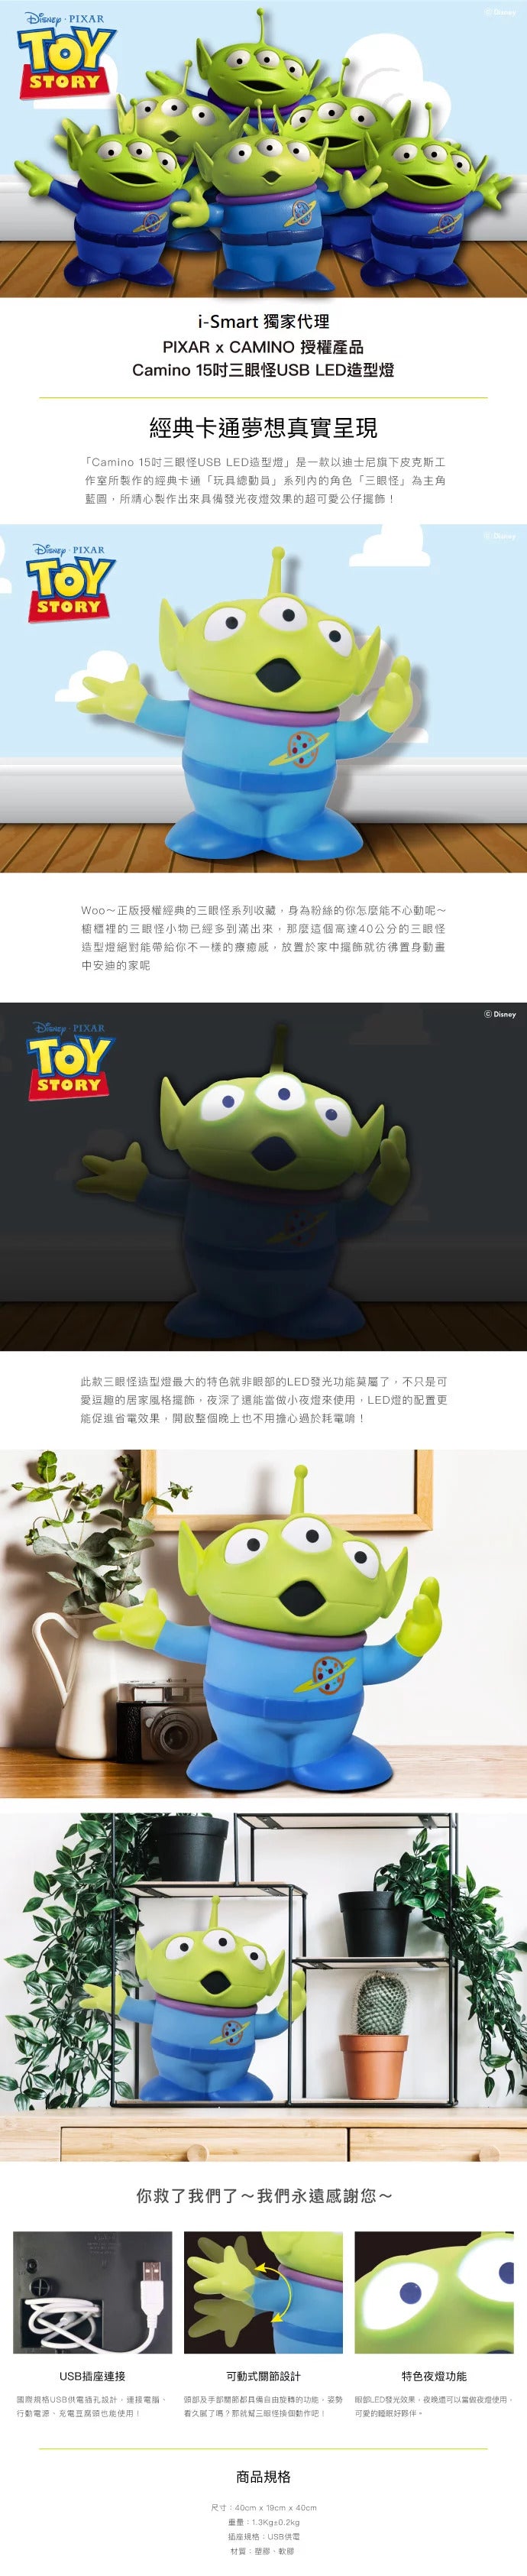 Toystory Alien USB Light - up-next.com.hk